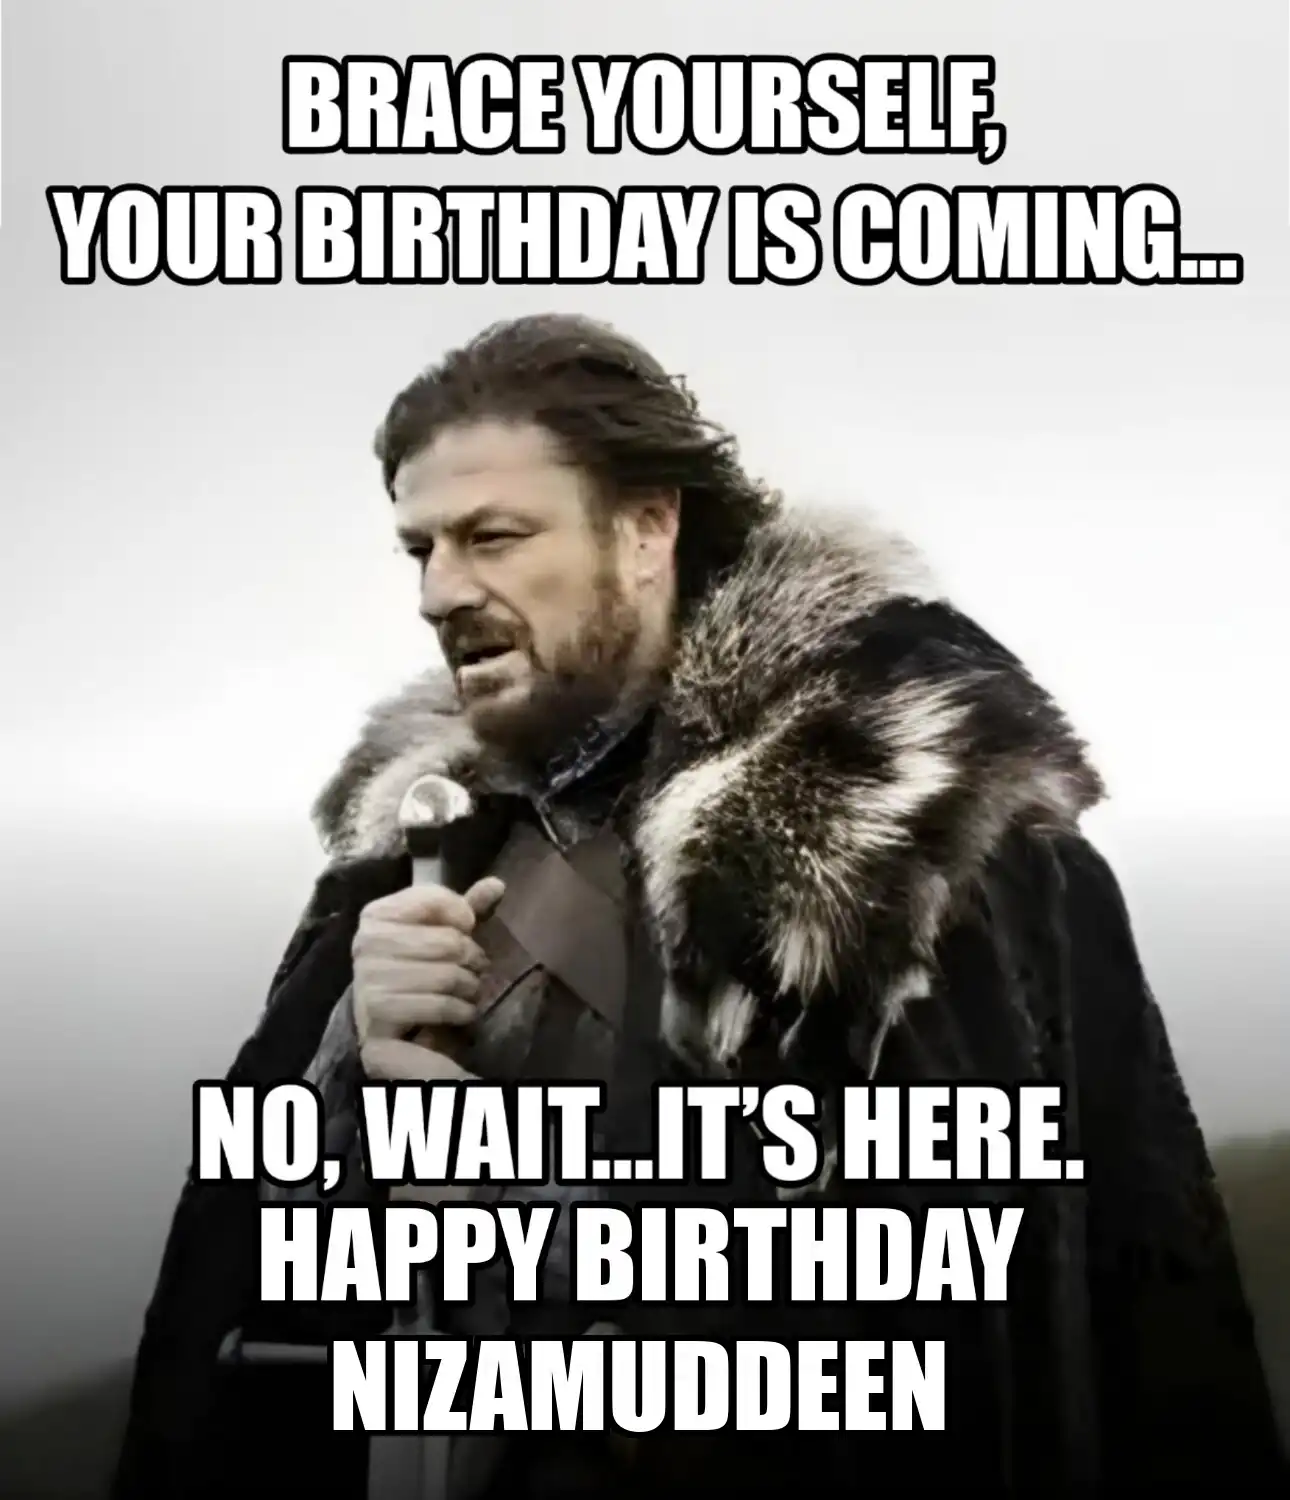 Happy Birthday Nizamuddeen Brace Yourself Your Birthday Is Coming Meme